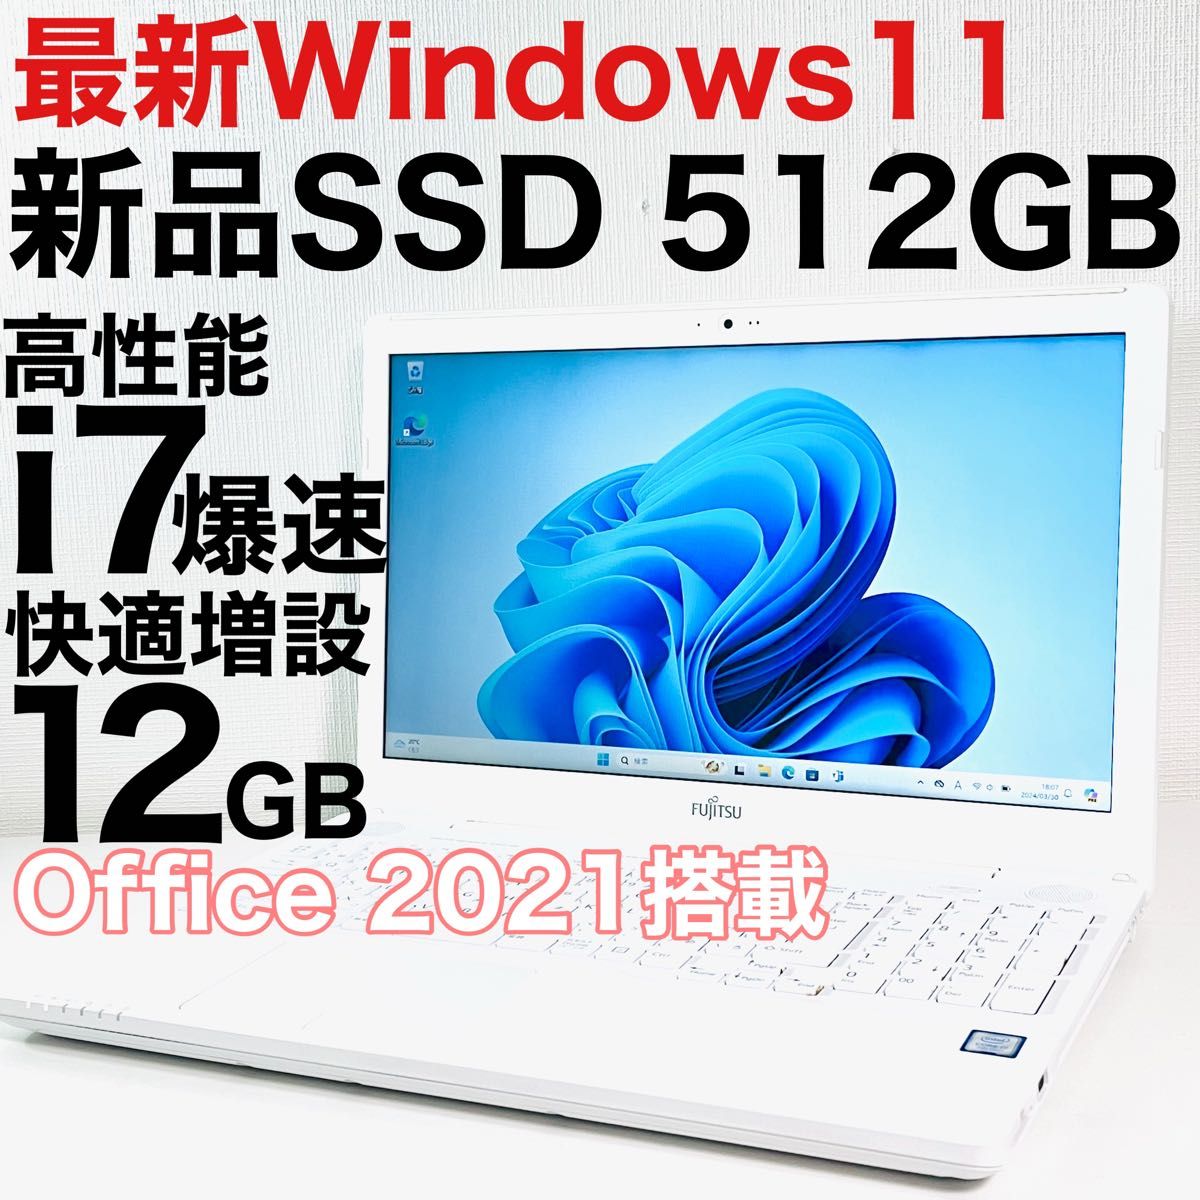 Windows11オフィス2021付きノートパソコン 高年式富士通製corei7爆速 